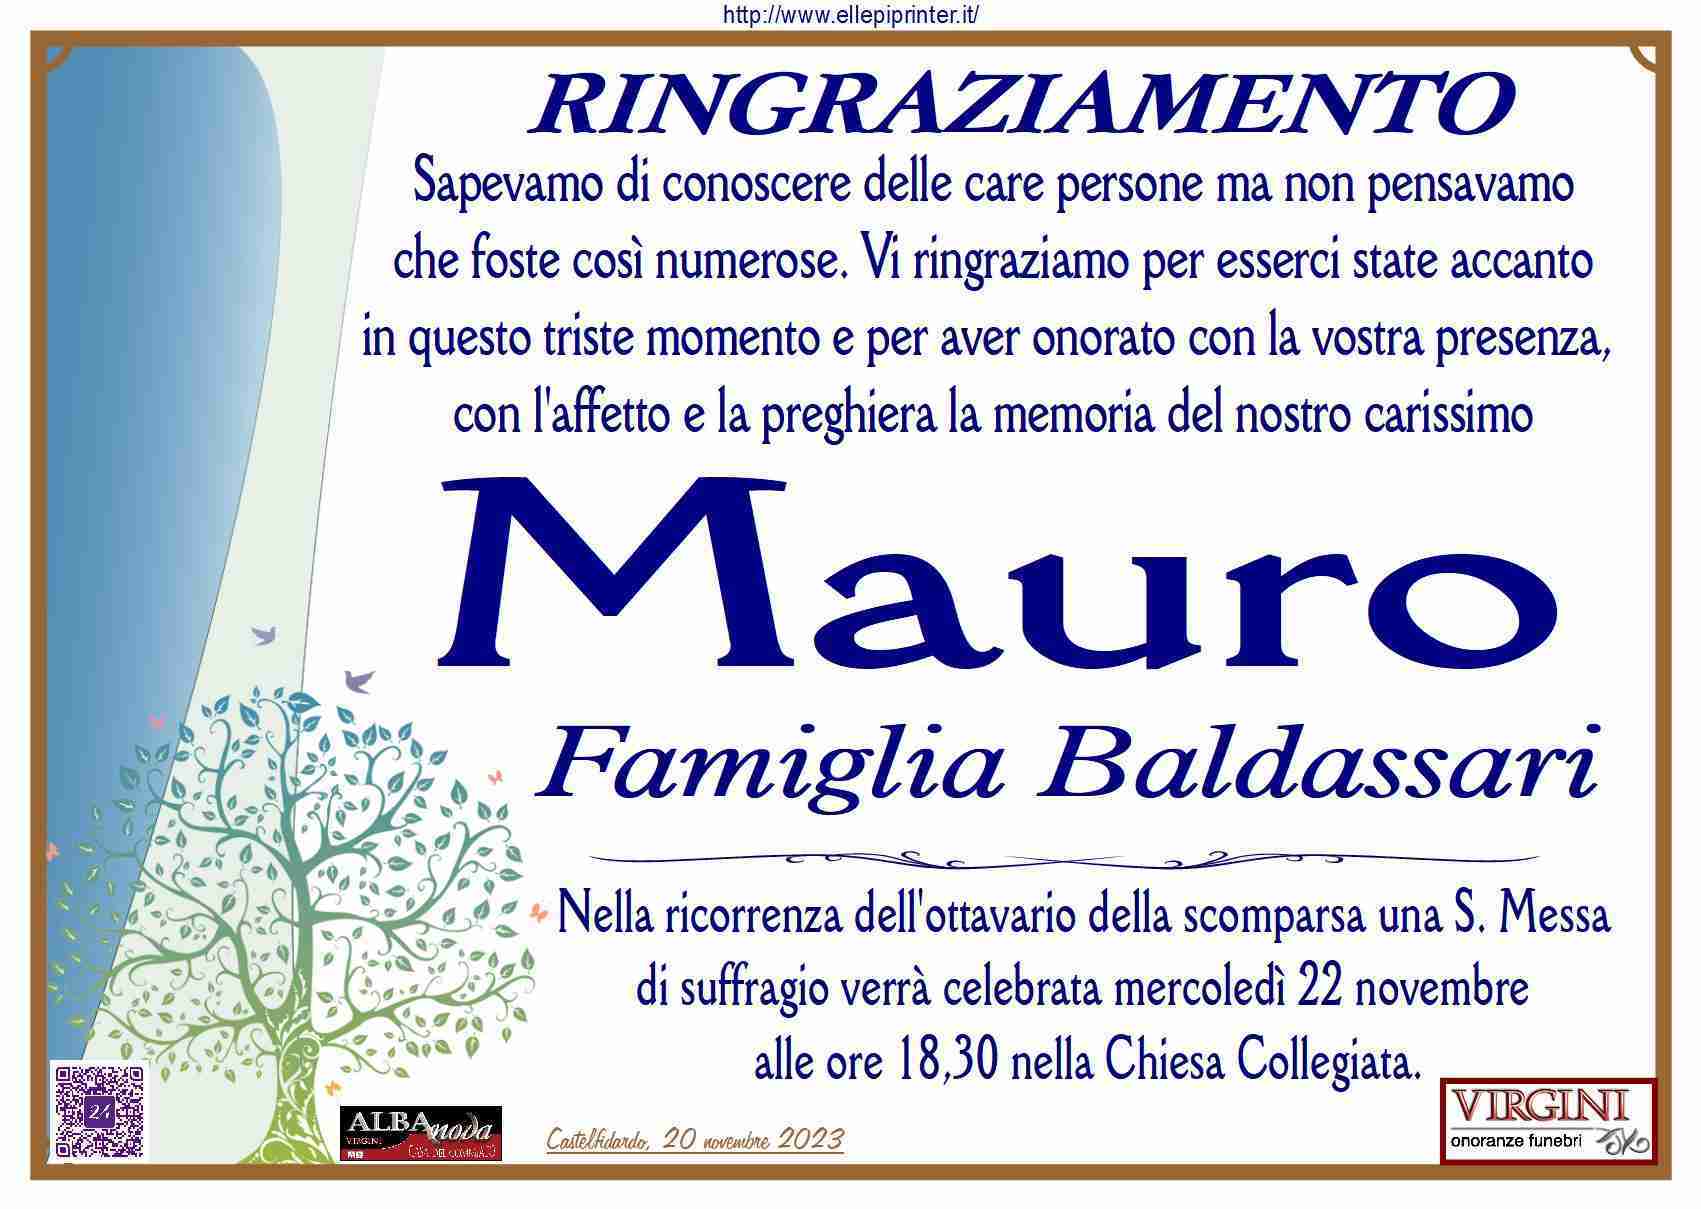 Mauro Baldassari